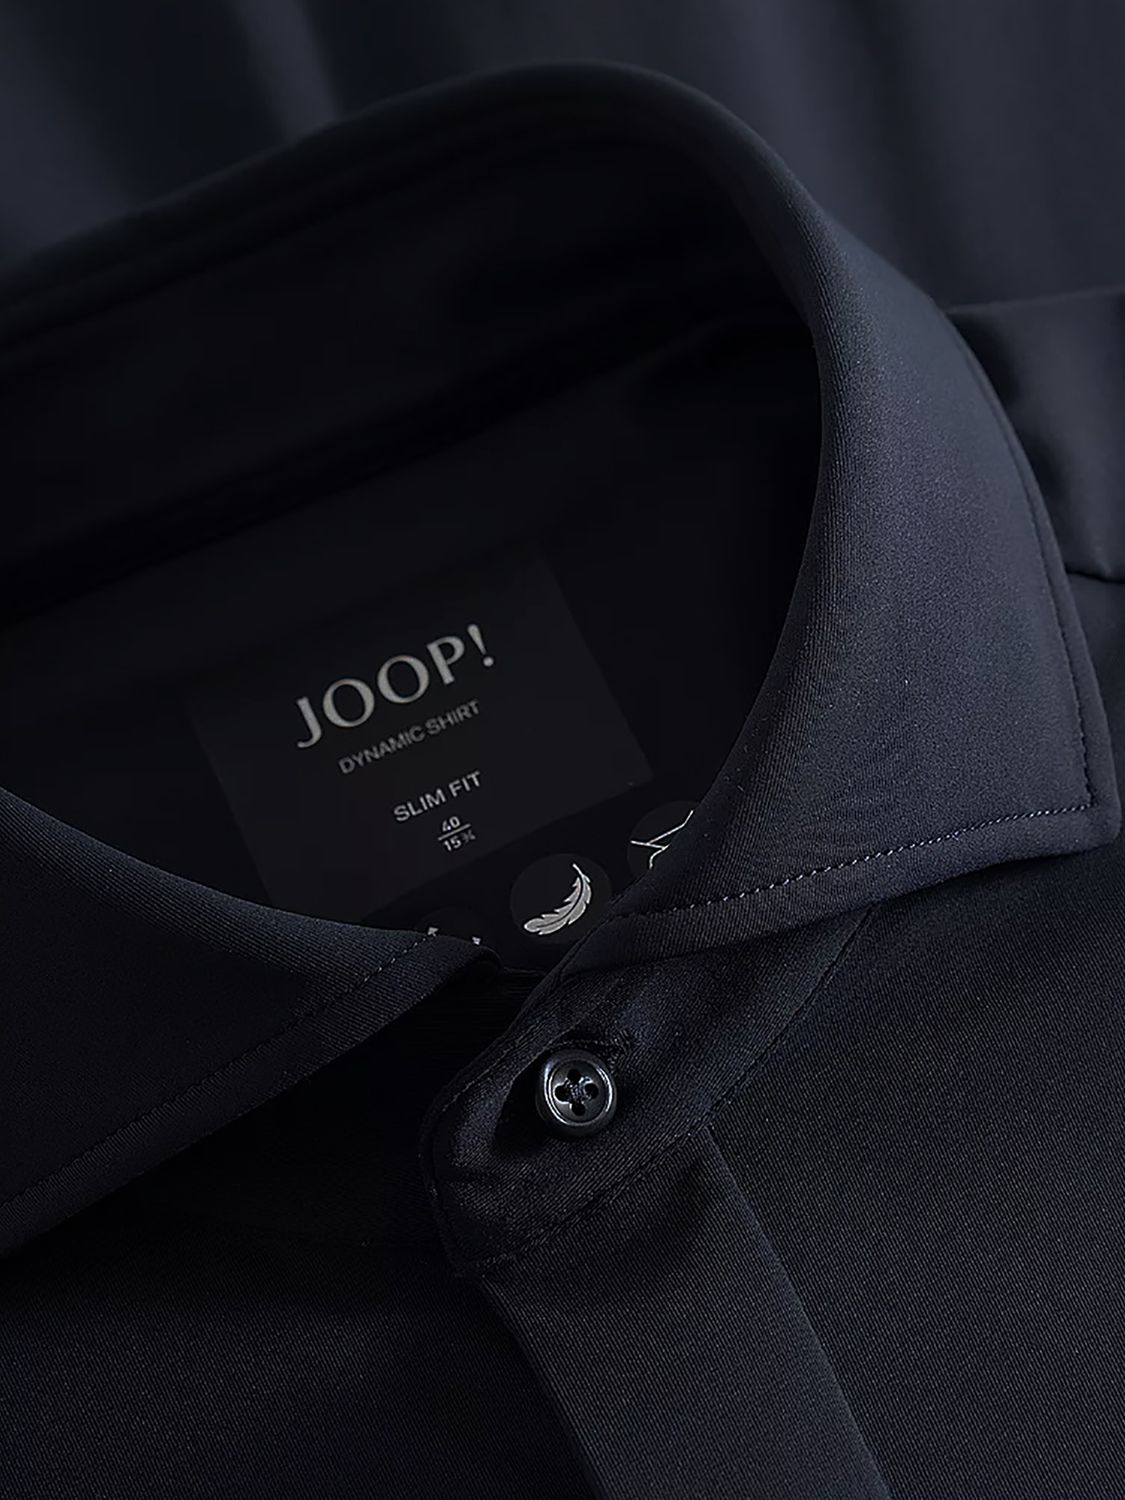 JOOP! Pals Short Sleeve Shirt, Black, 16.5